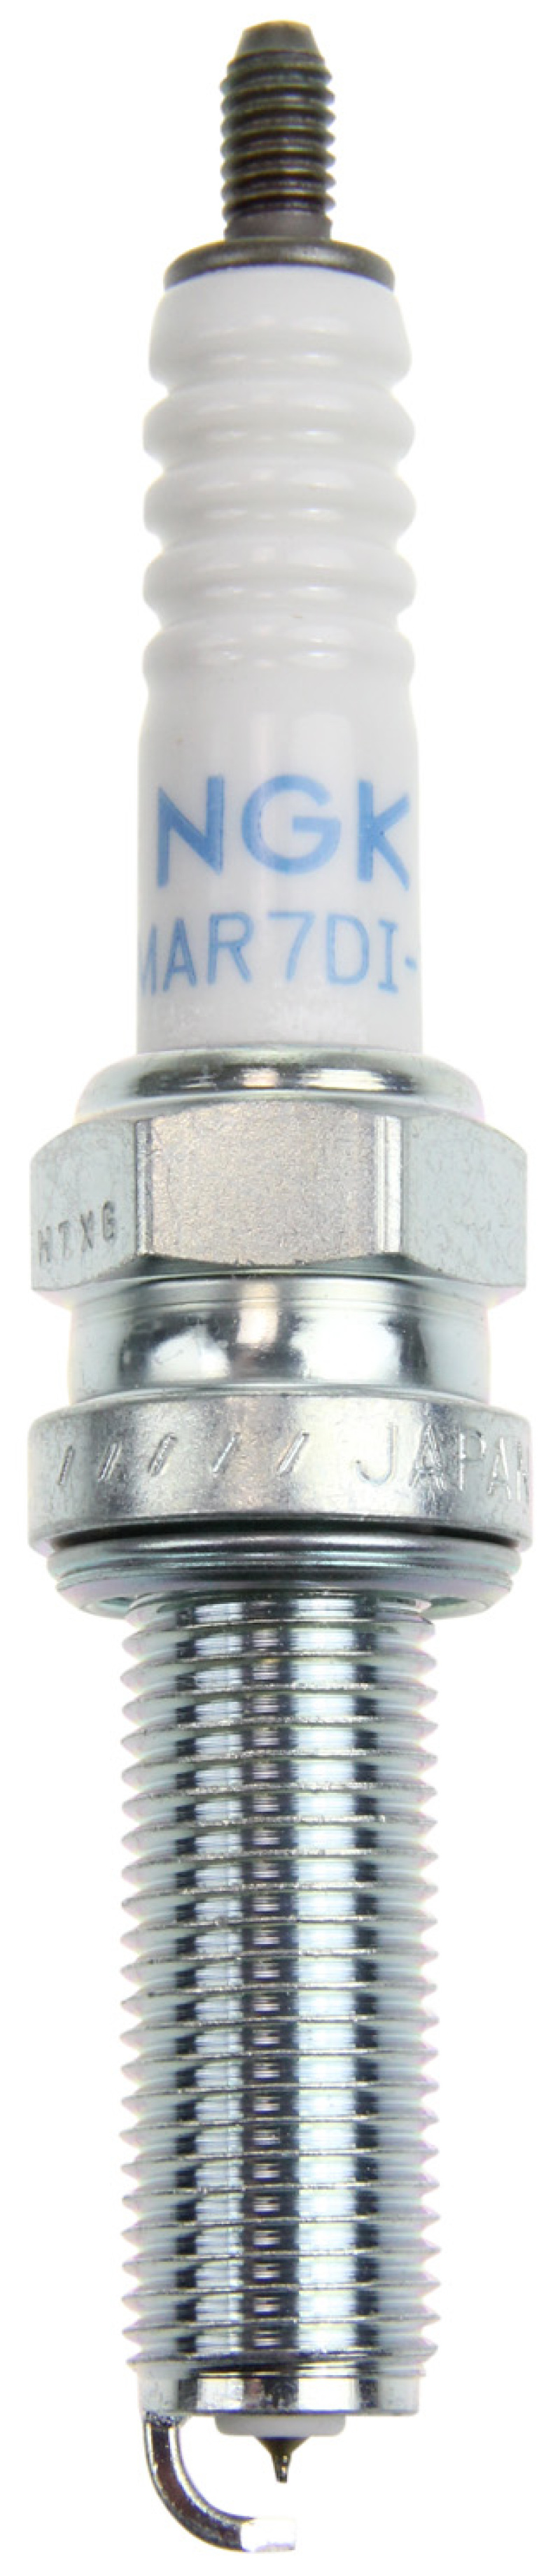 NGK Laser Iridium Spark Plug Box of 4 (LMAR8BI-9) - 91909